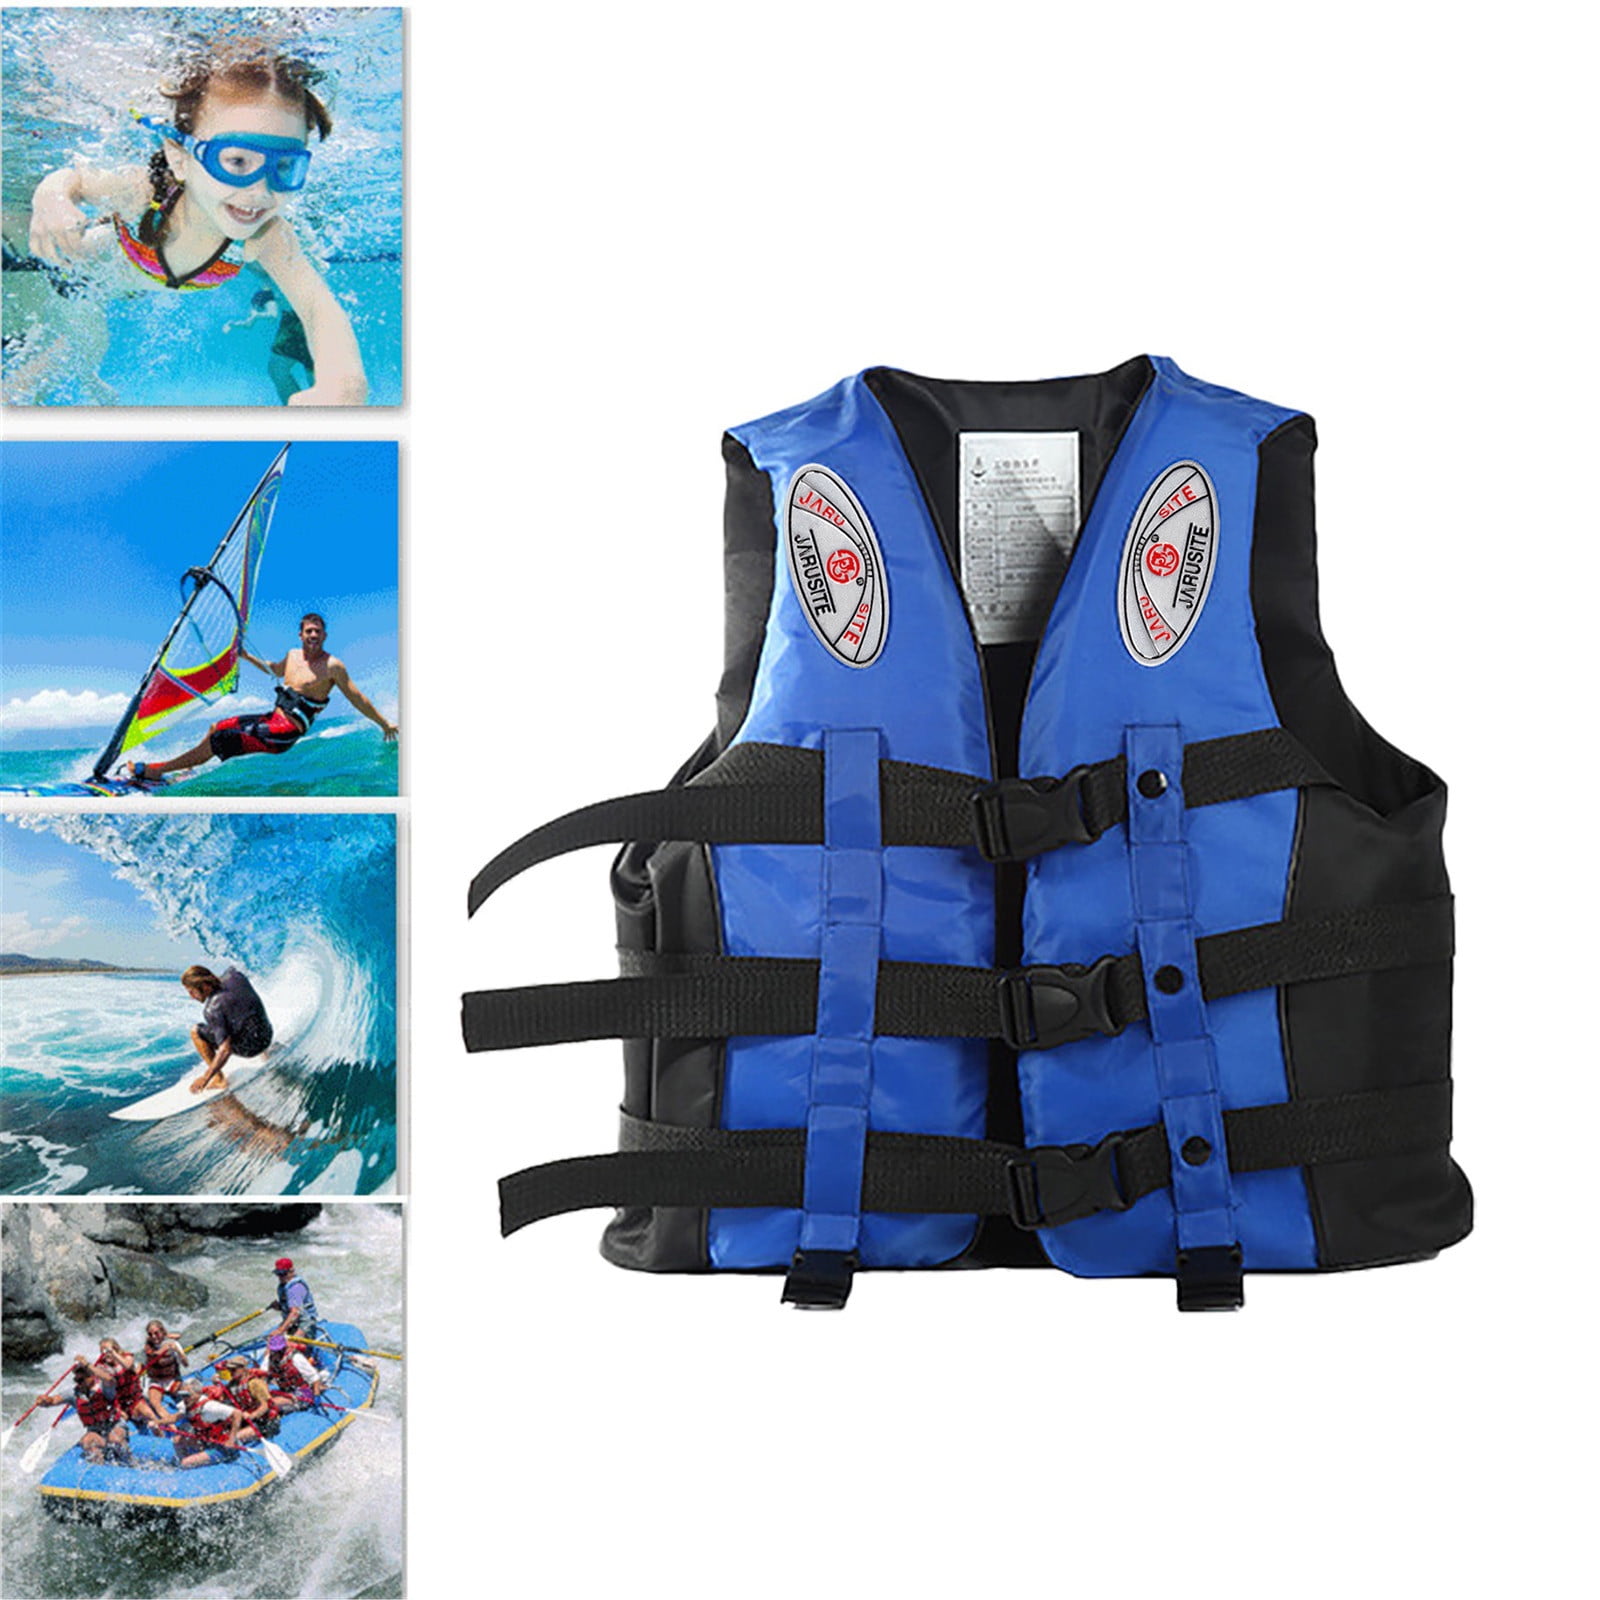 Adult Children's Life Jacket Kayak Ski Buoyancy Suit Aid Vest Sailing Waters #TO 